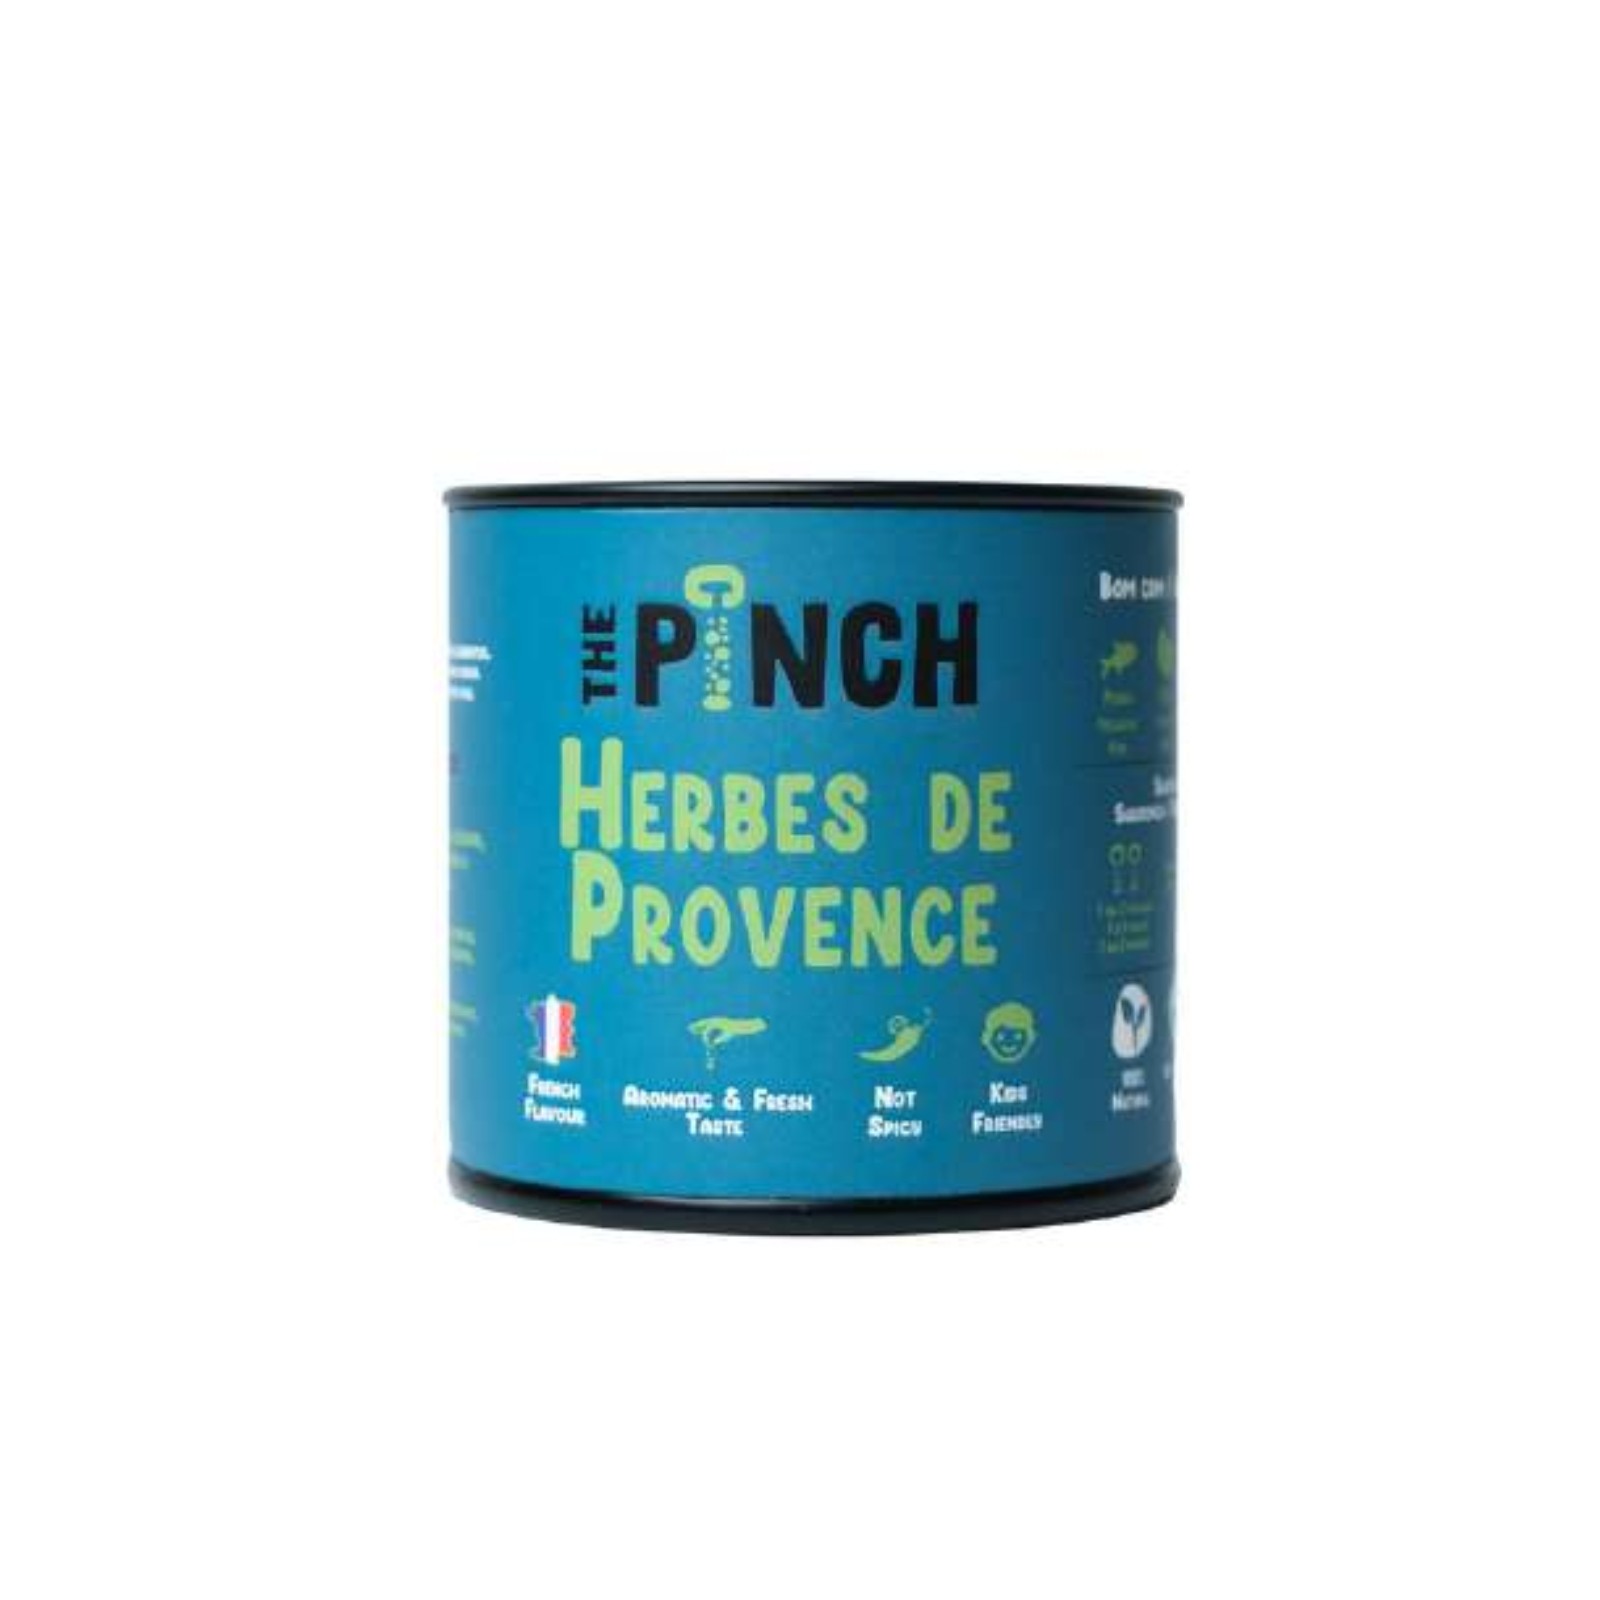 The Pinch Herbes de Provence Seasoning